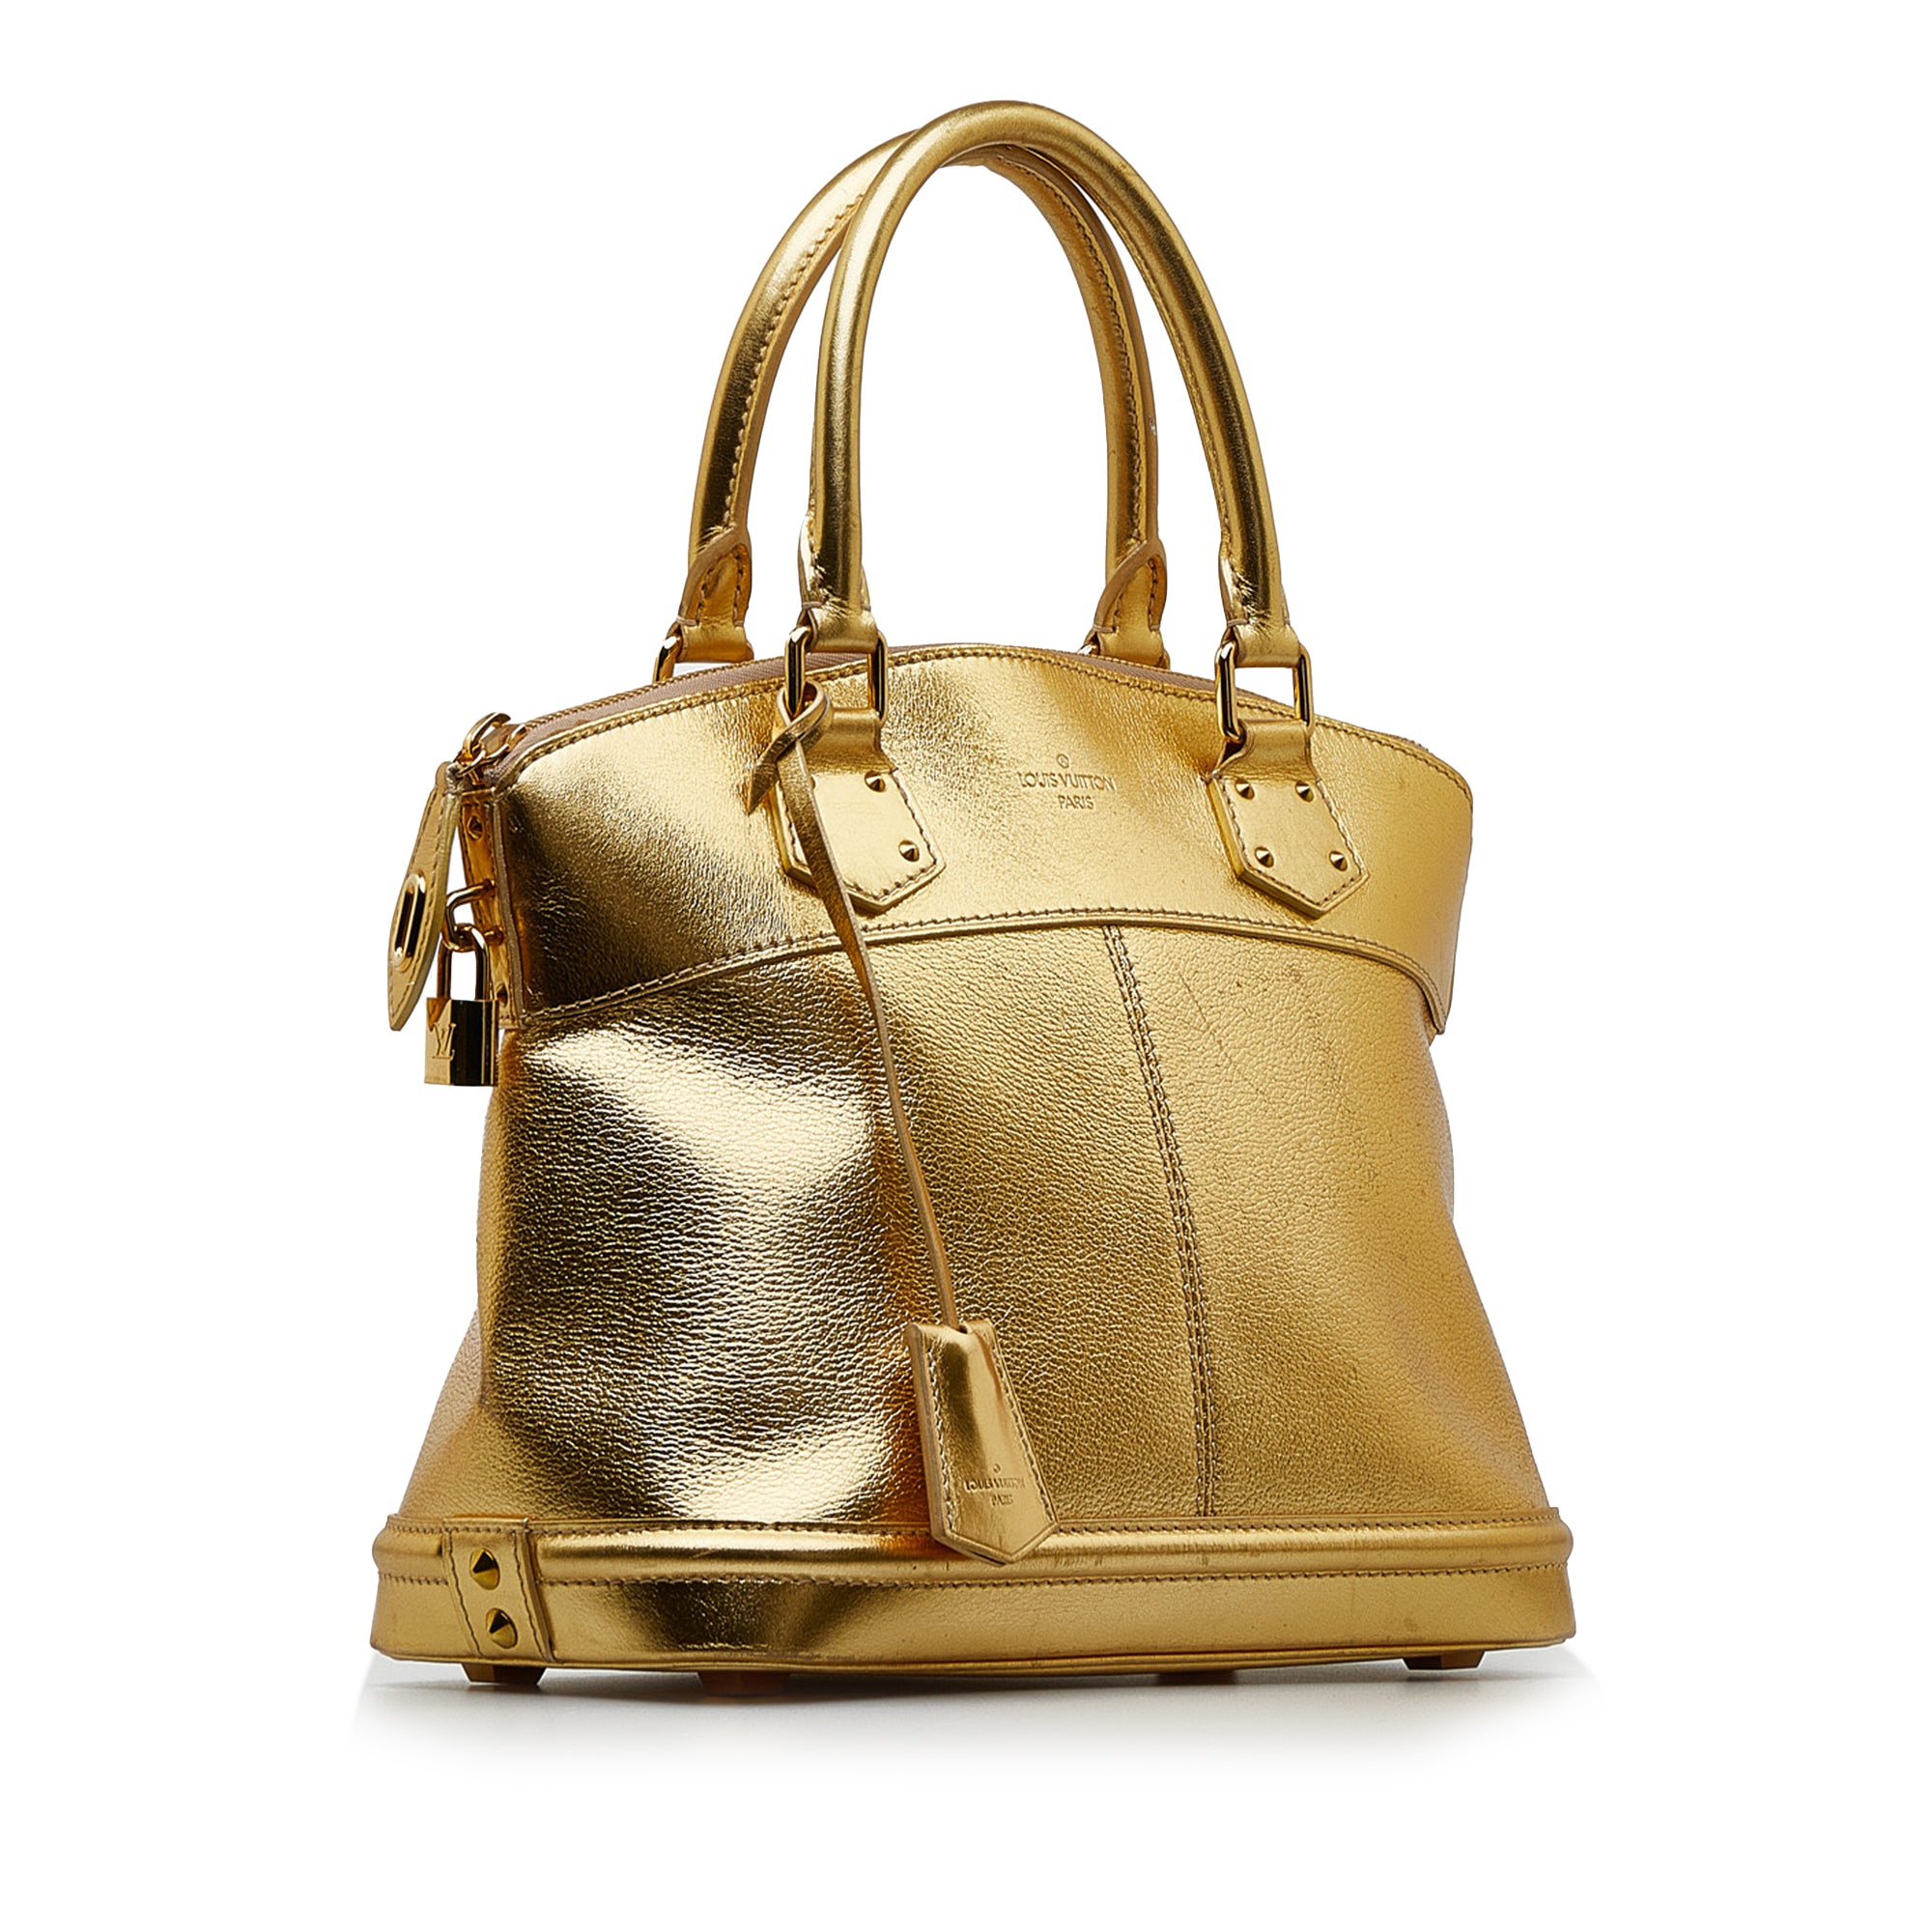 Louis Vuitton Silver Suhali Lockit PM Handbag